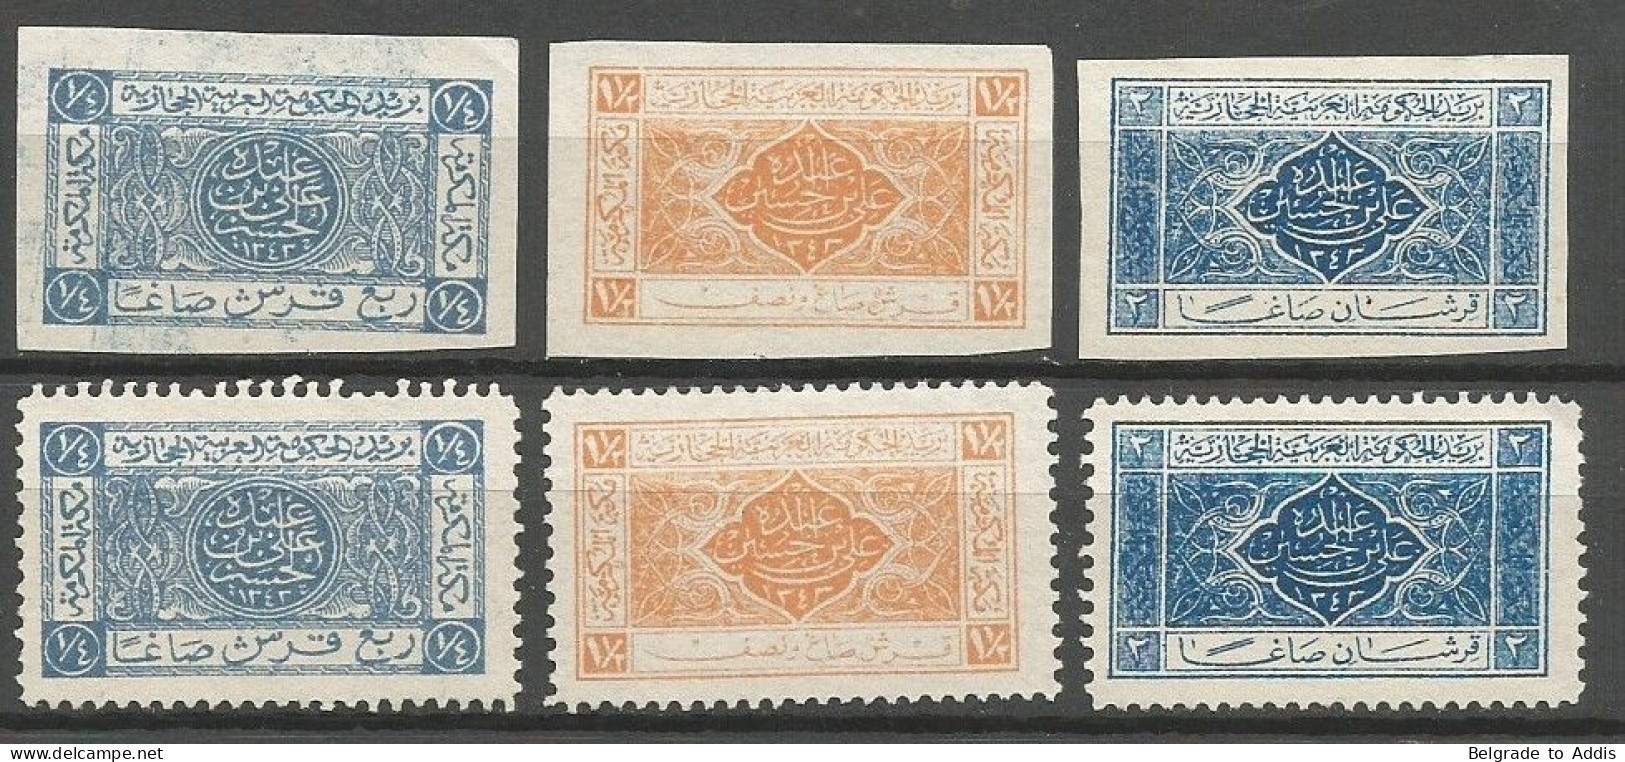 Saudi Arabia 6 PROOFS Perforated & Imperforated Mint 1925 - Saudi Arabia